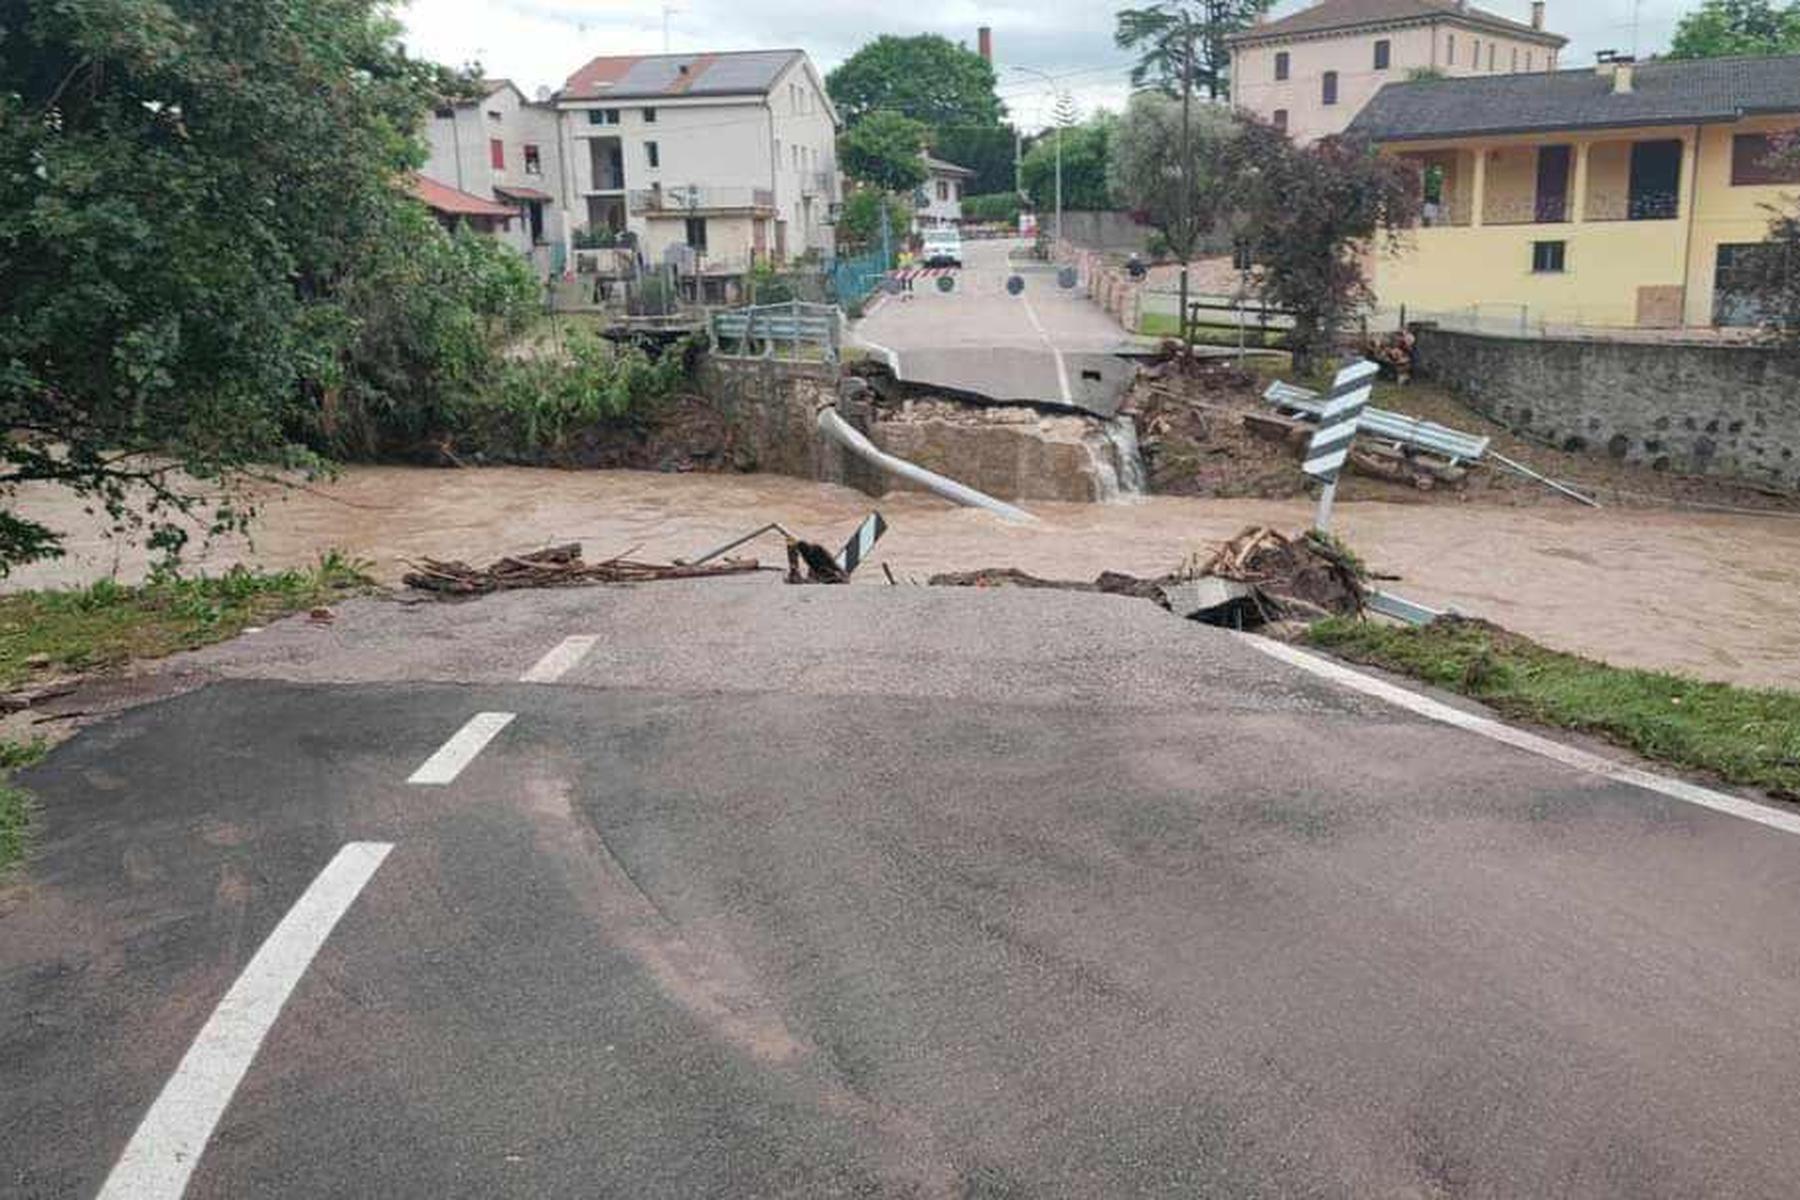 Italien: Brücke weggebrochen: Schwere Unwetter in Friaul und Venetien